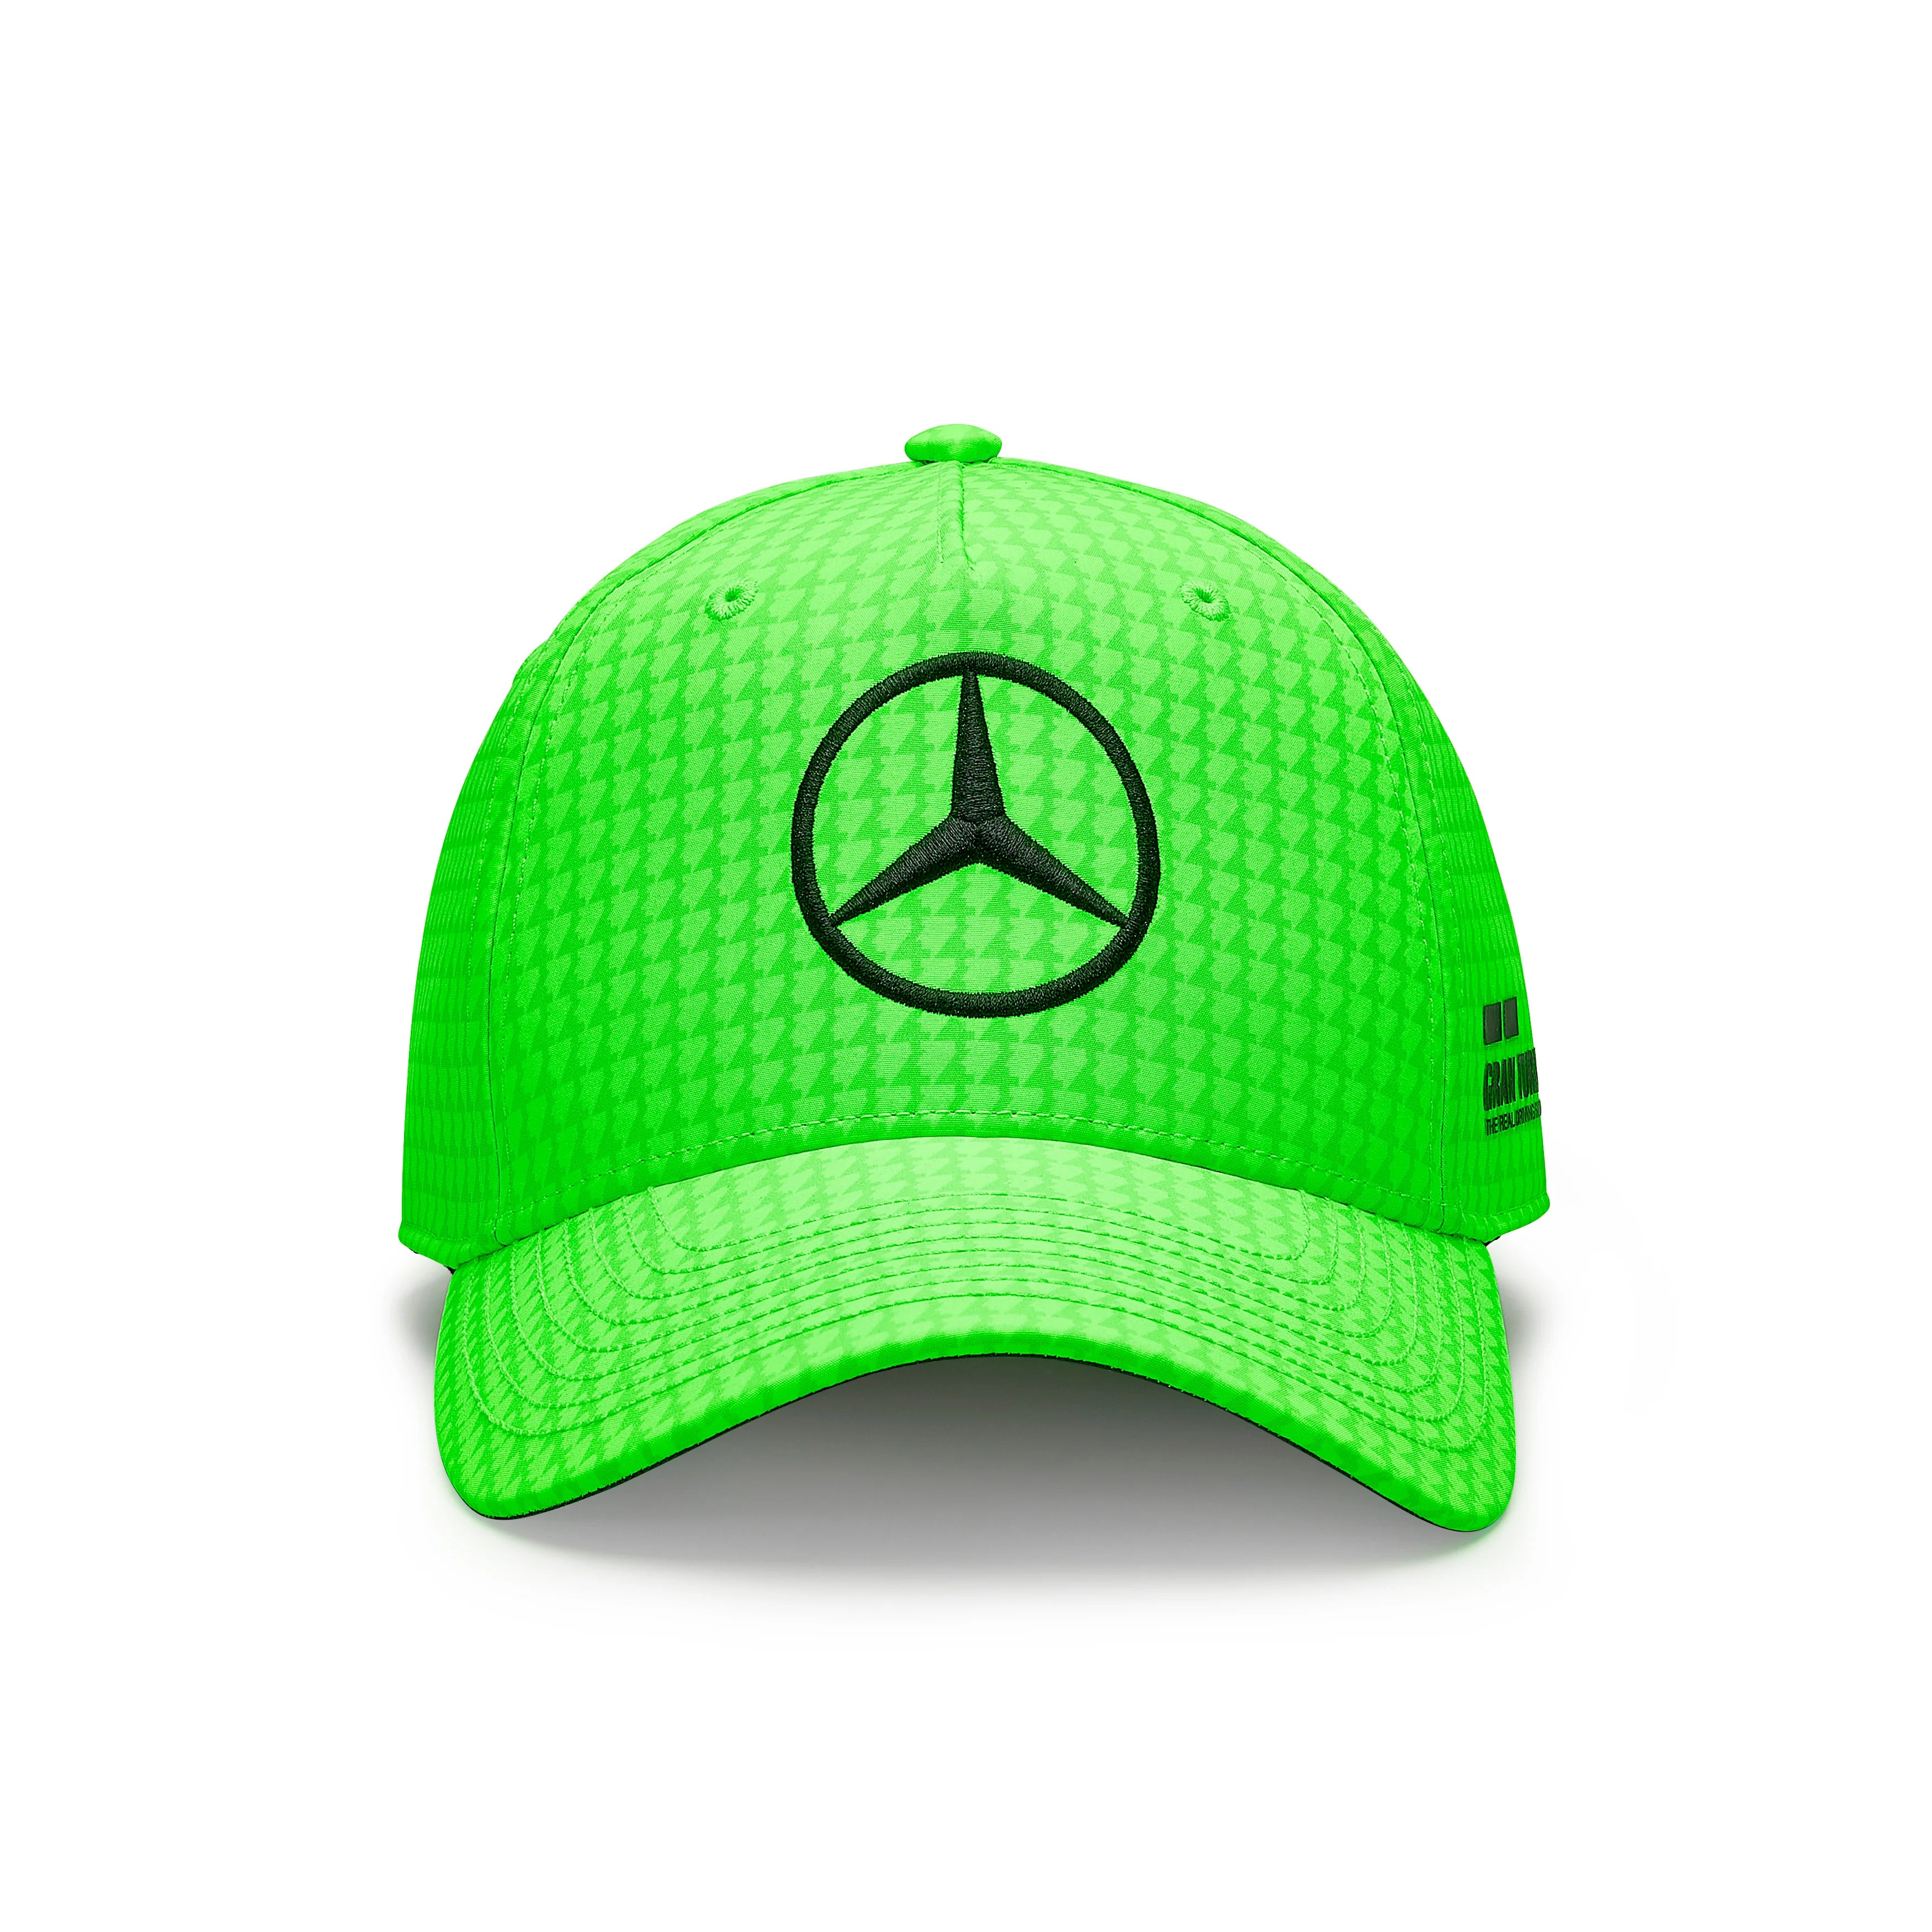 Mercedes AMG Petronas F1 Special Edition Lewis Hamilton British Silverstone GP Hat Neon Green